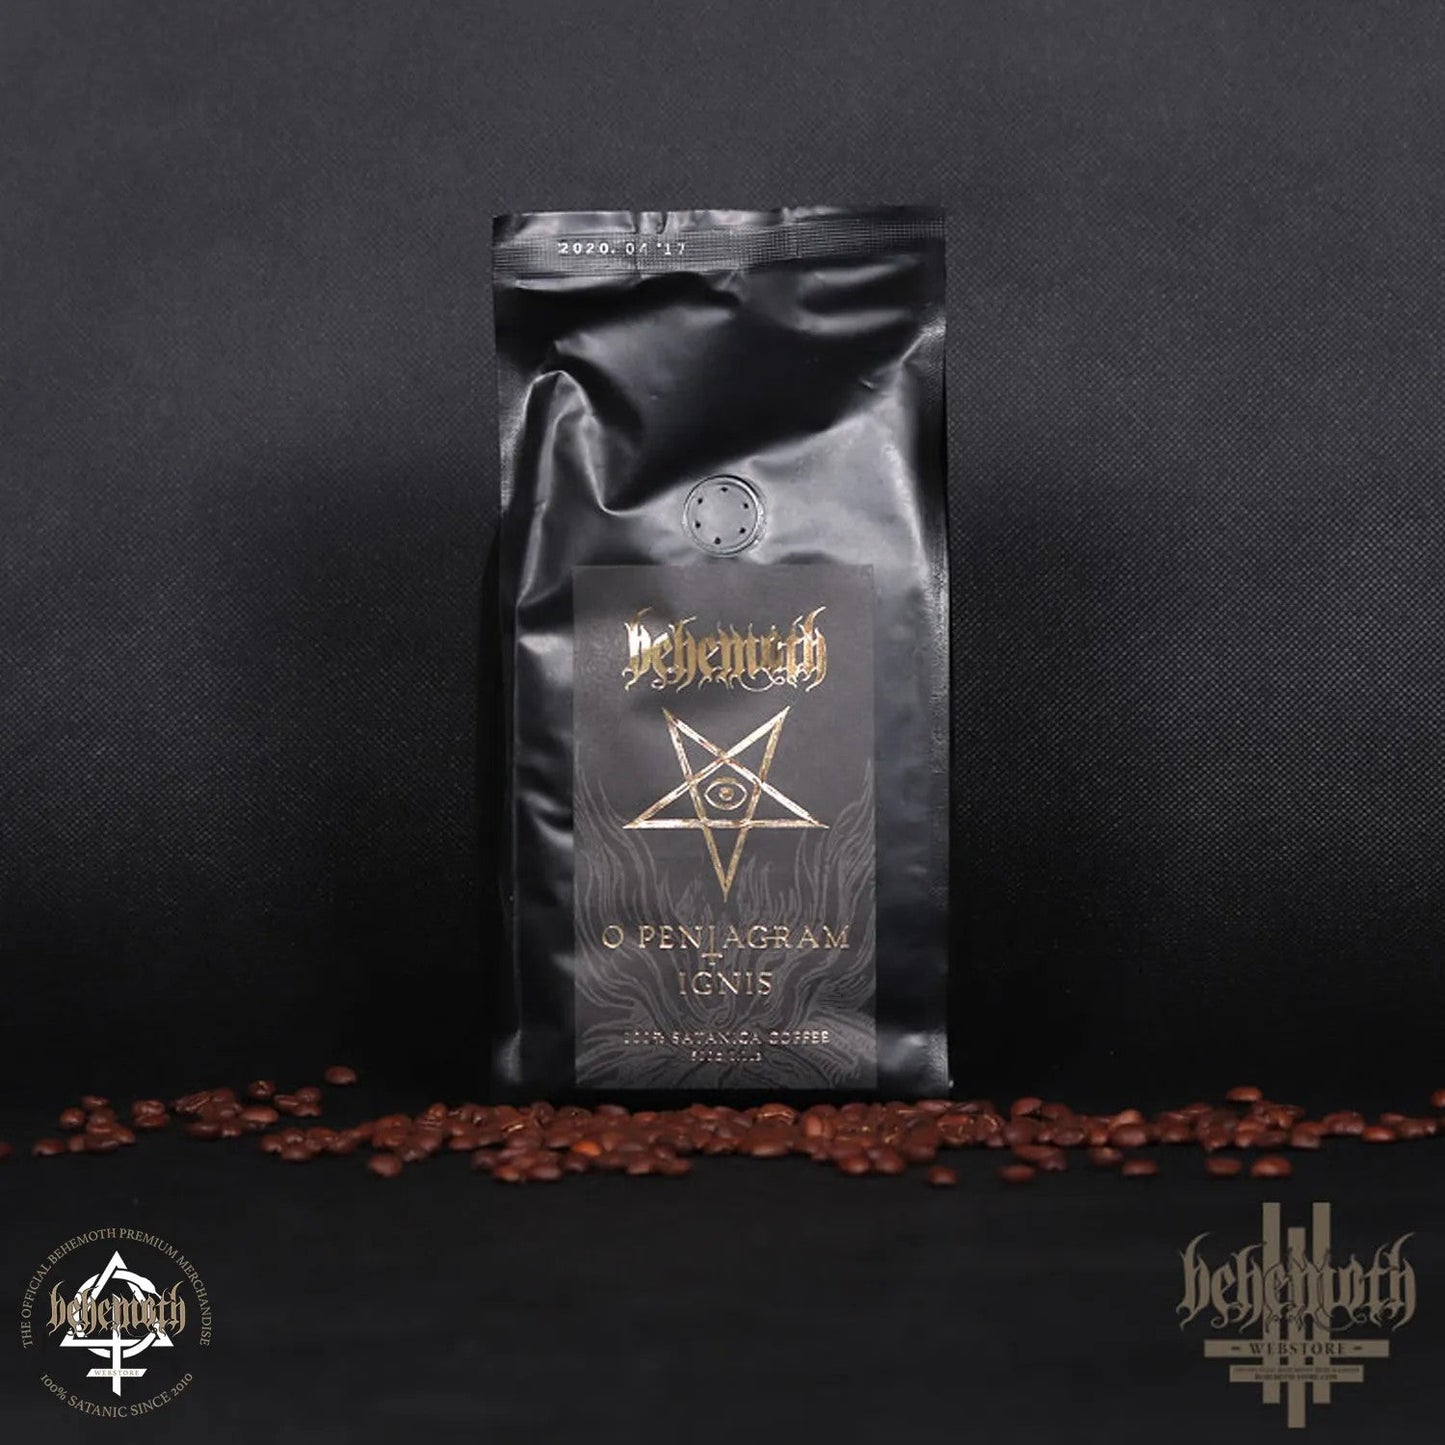 Behemoth 'O Pentagram Ignis' whole beans coffee 500 g / 1 lb